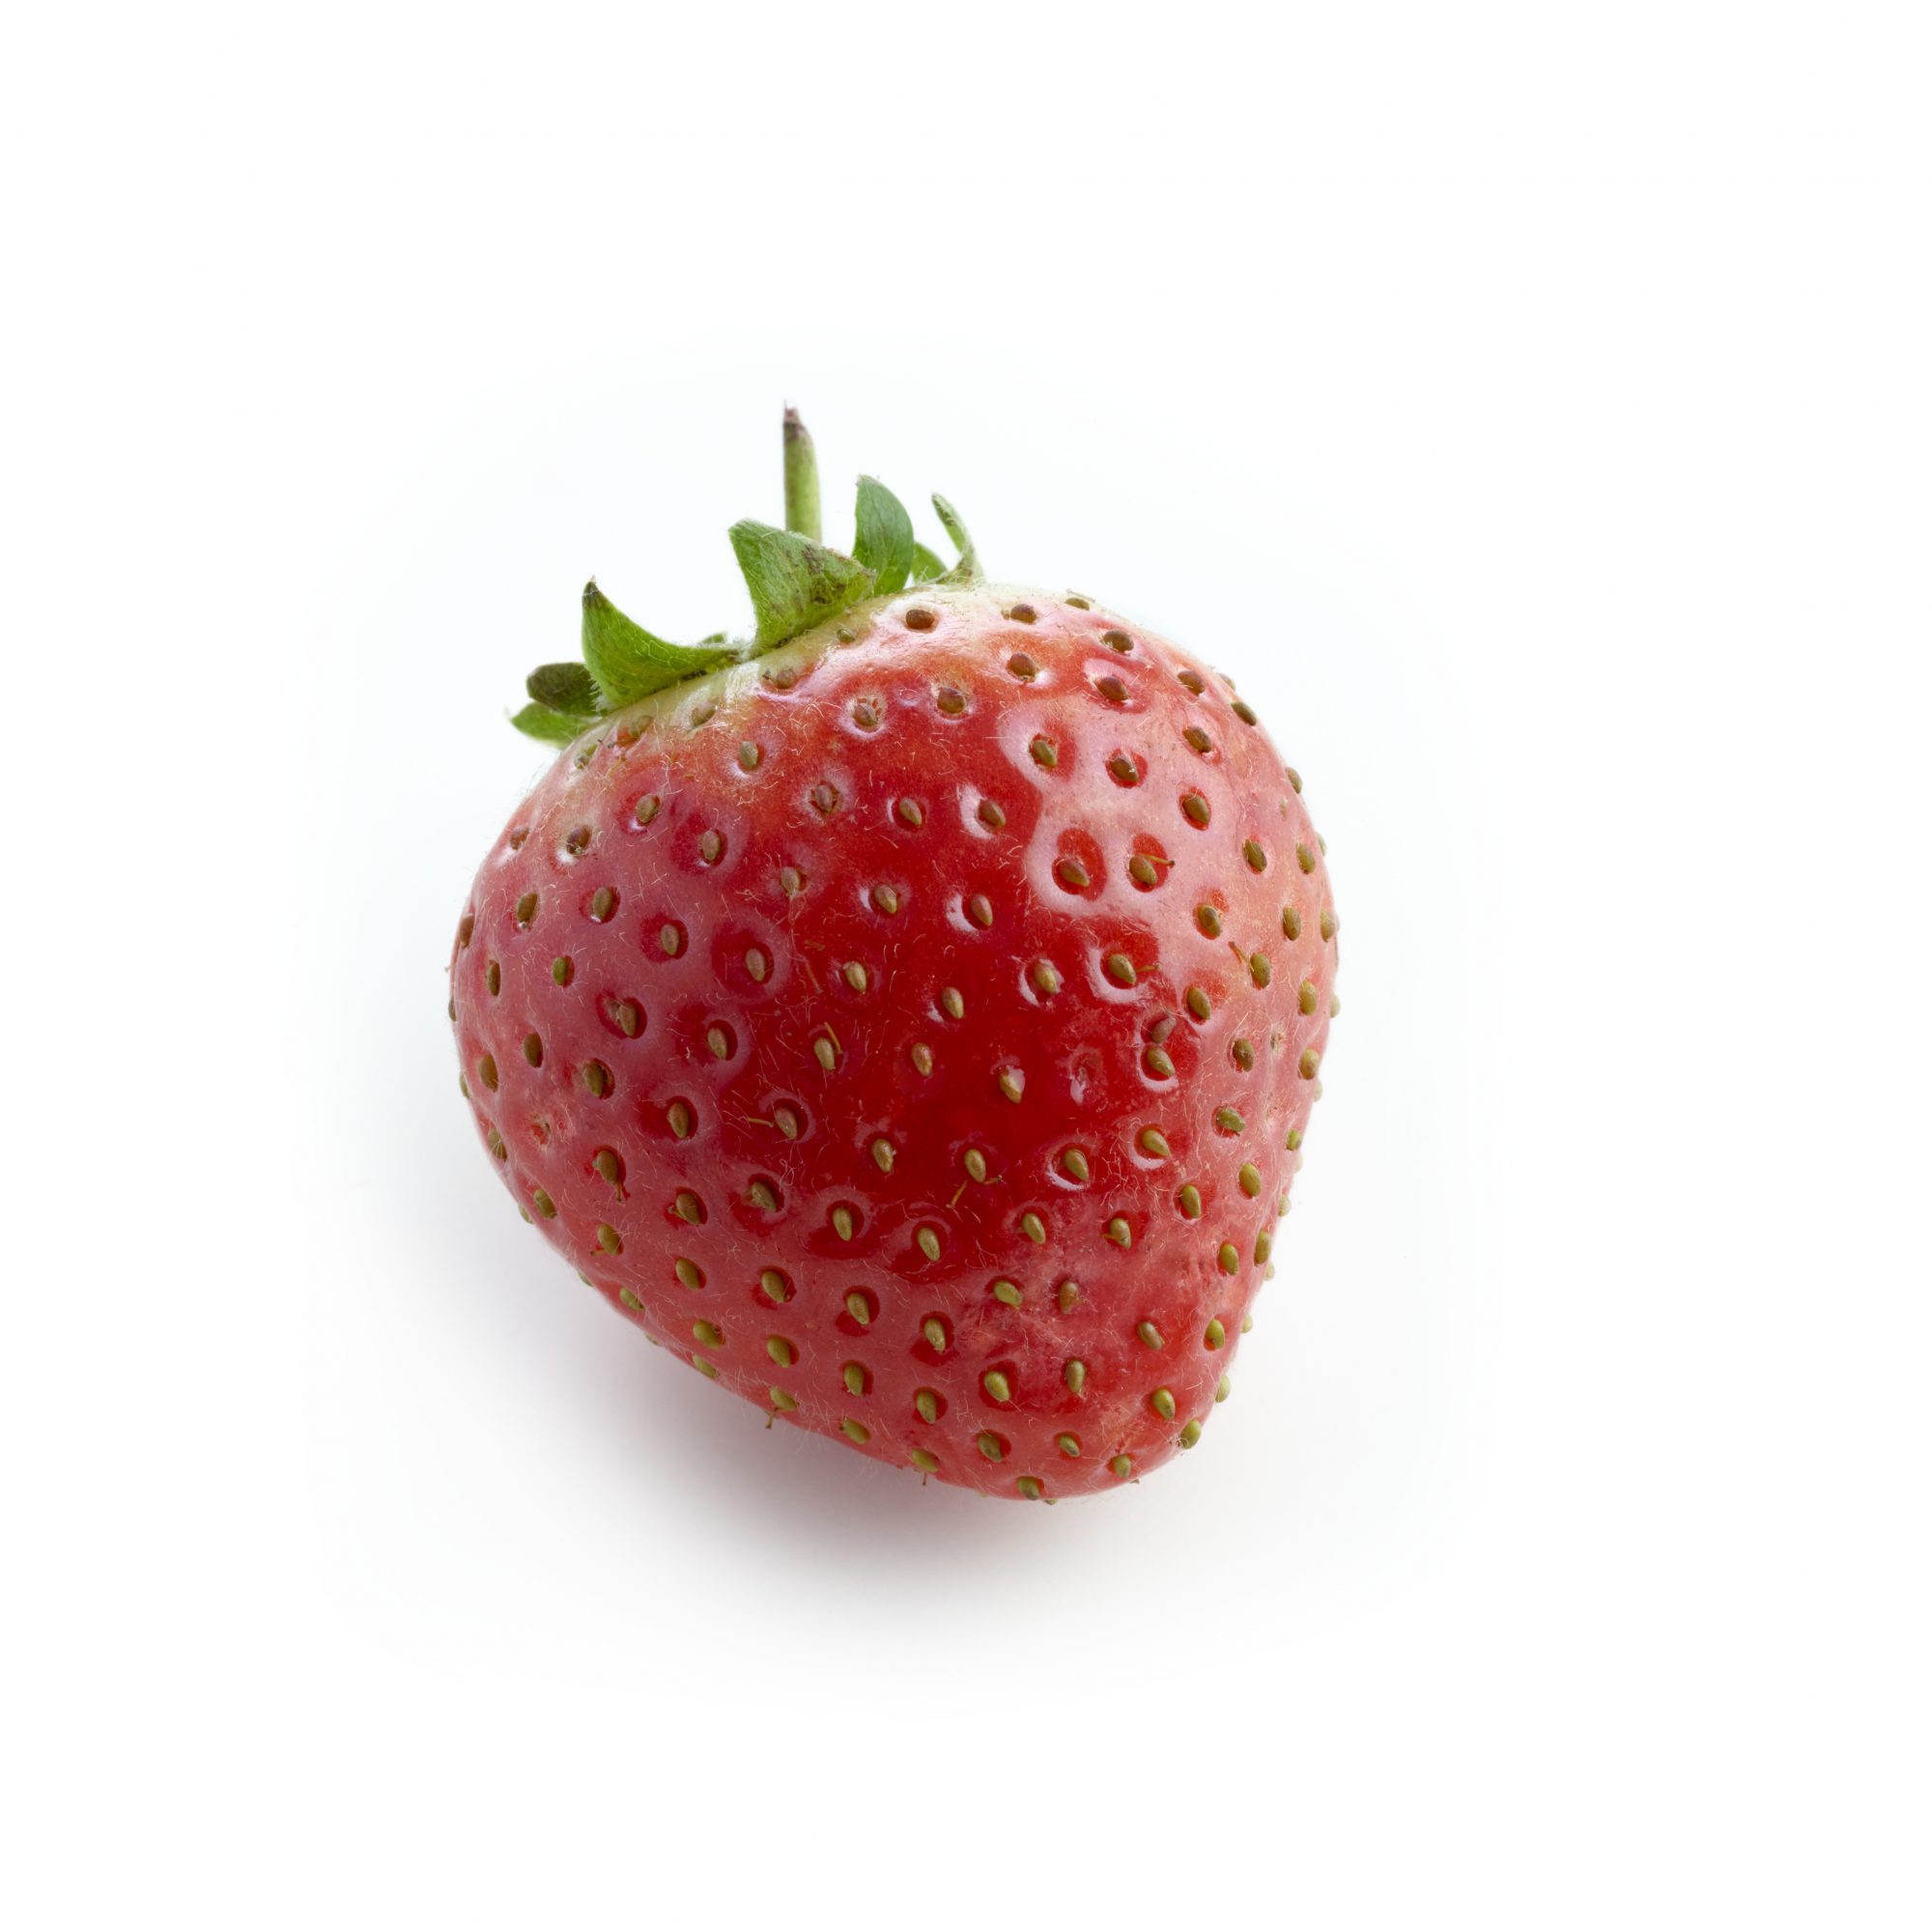 Mom Versus Strawberry